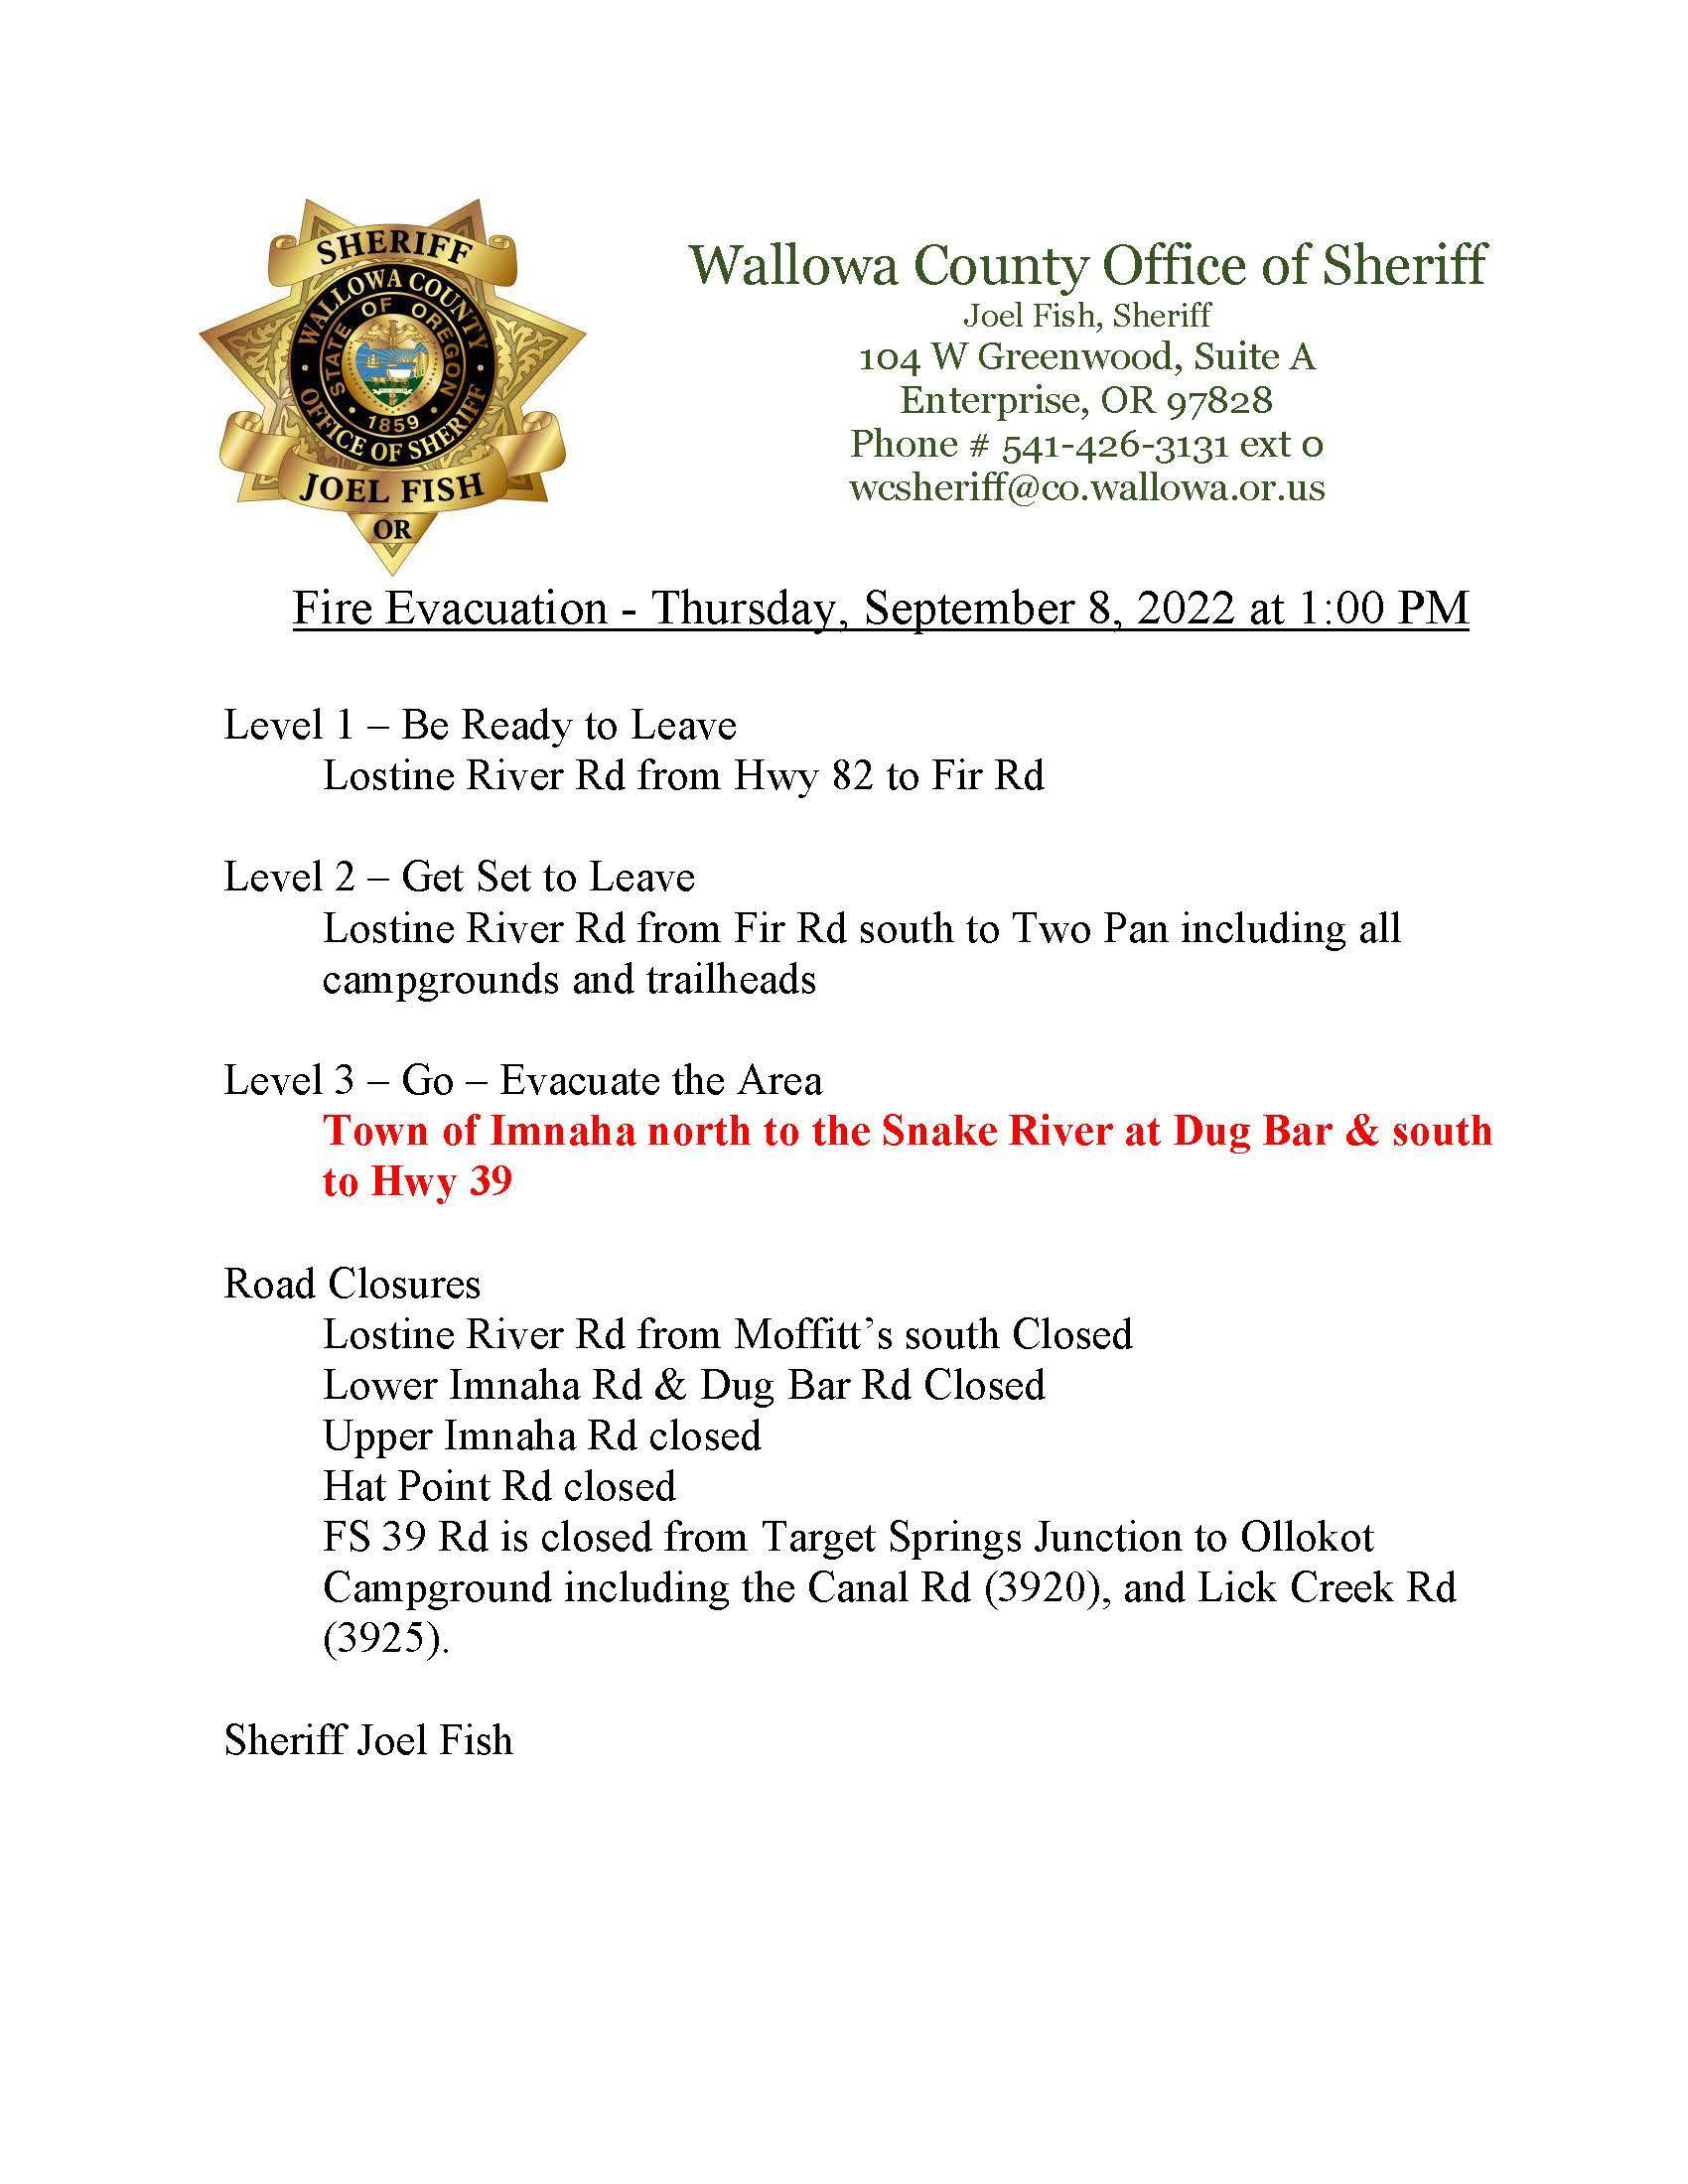 Wallowa County fire Evacuation - 09/08/2022